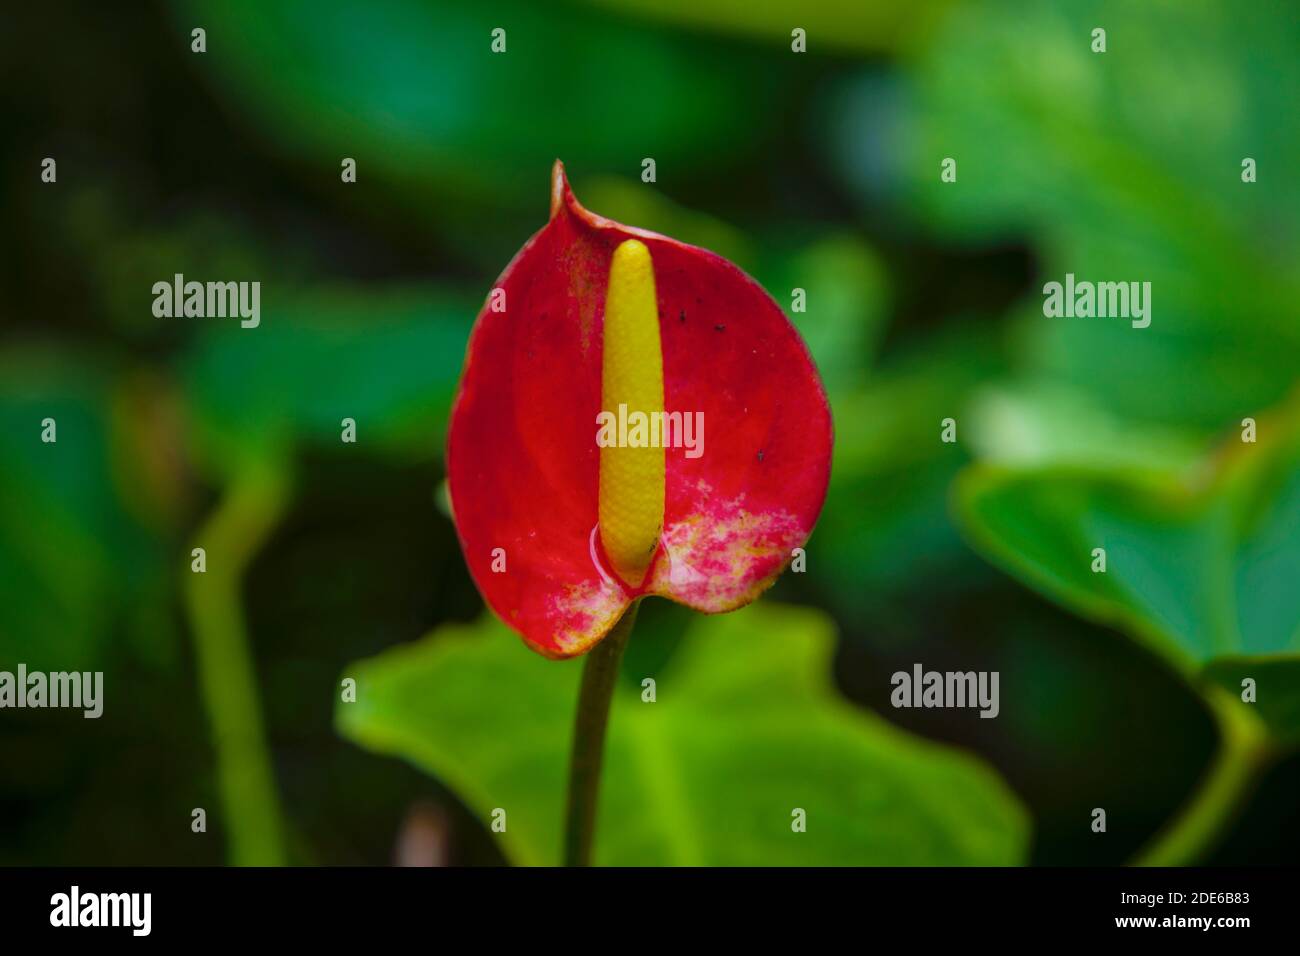 TÌNH YÊU CÂY CỎ ĐV.3 - Page 46 Close-up-anthurium-spectabile-red-flower-botany-2DE6B83